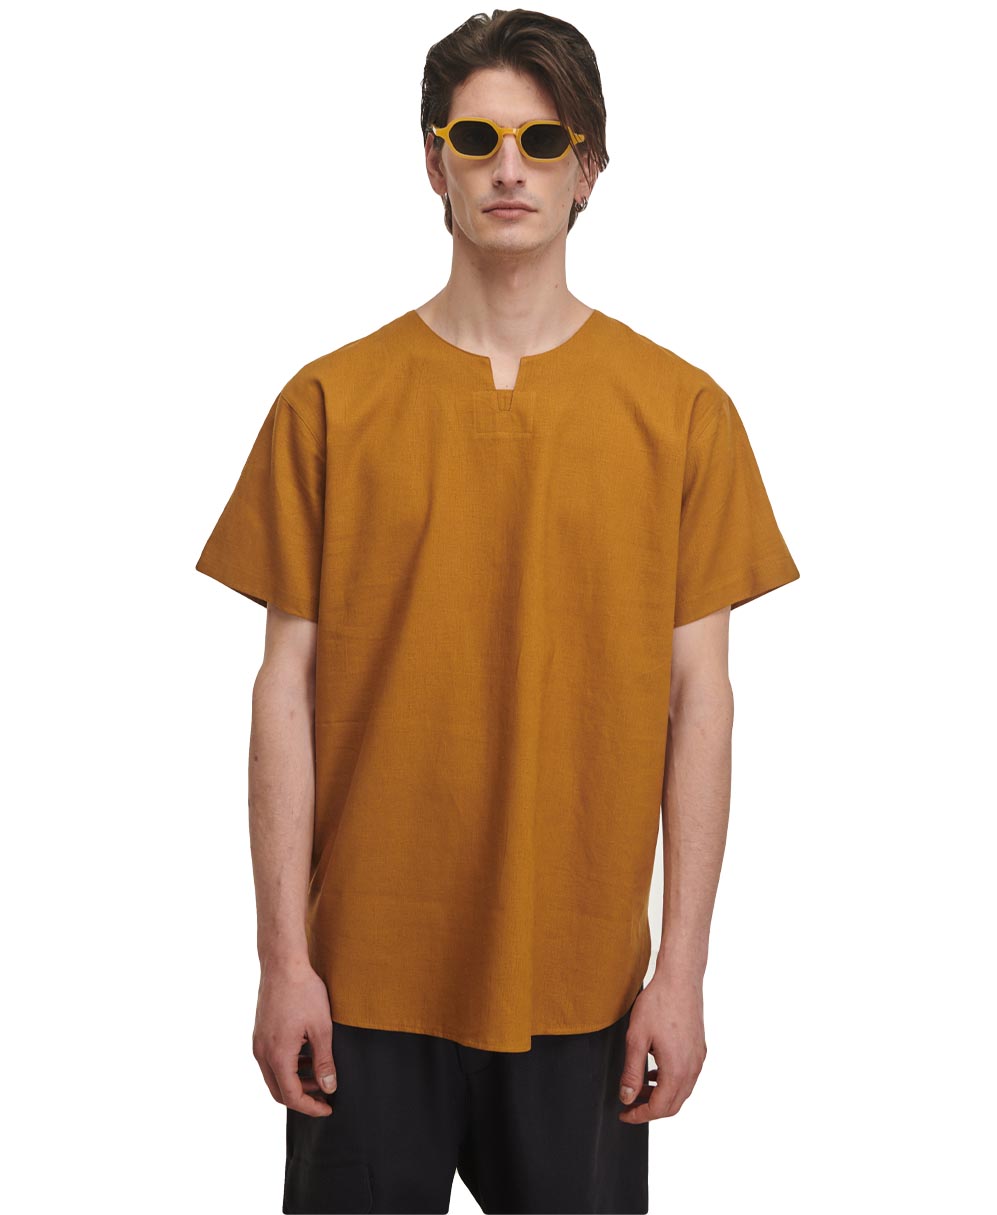 bronze tshirt pcoc 2022 me asummetria longline oversized me anoigma sto laimo